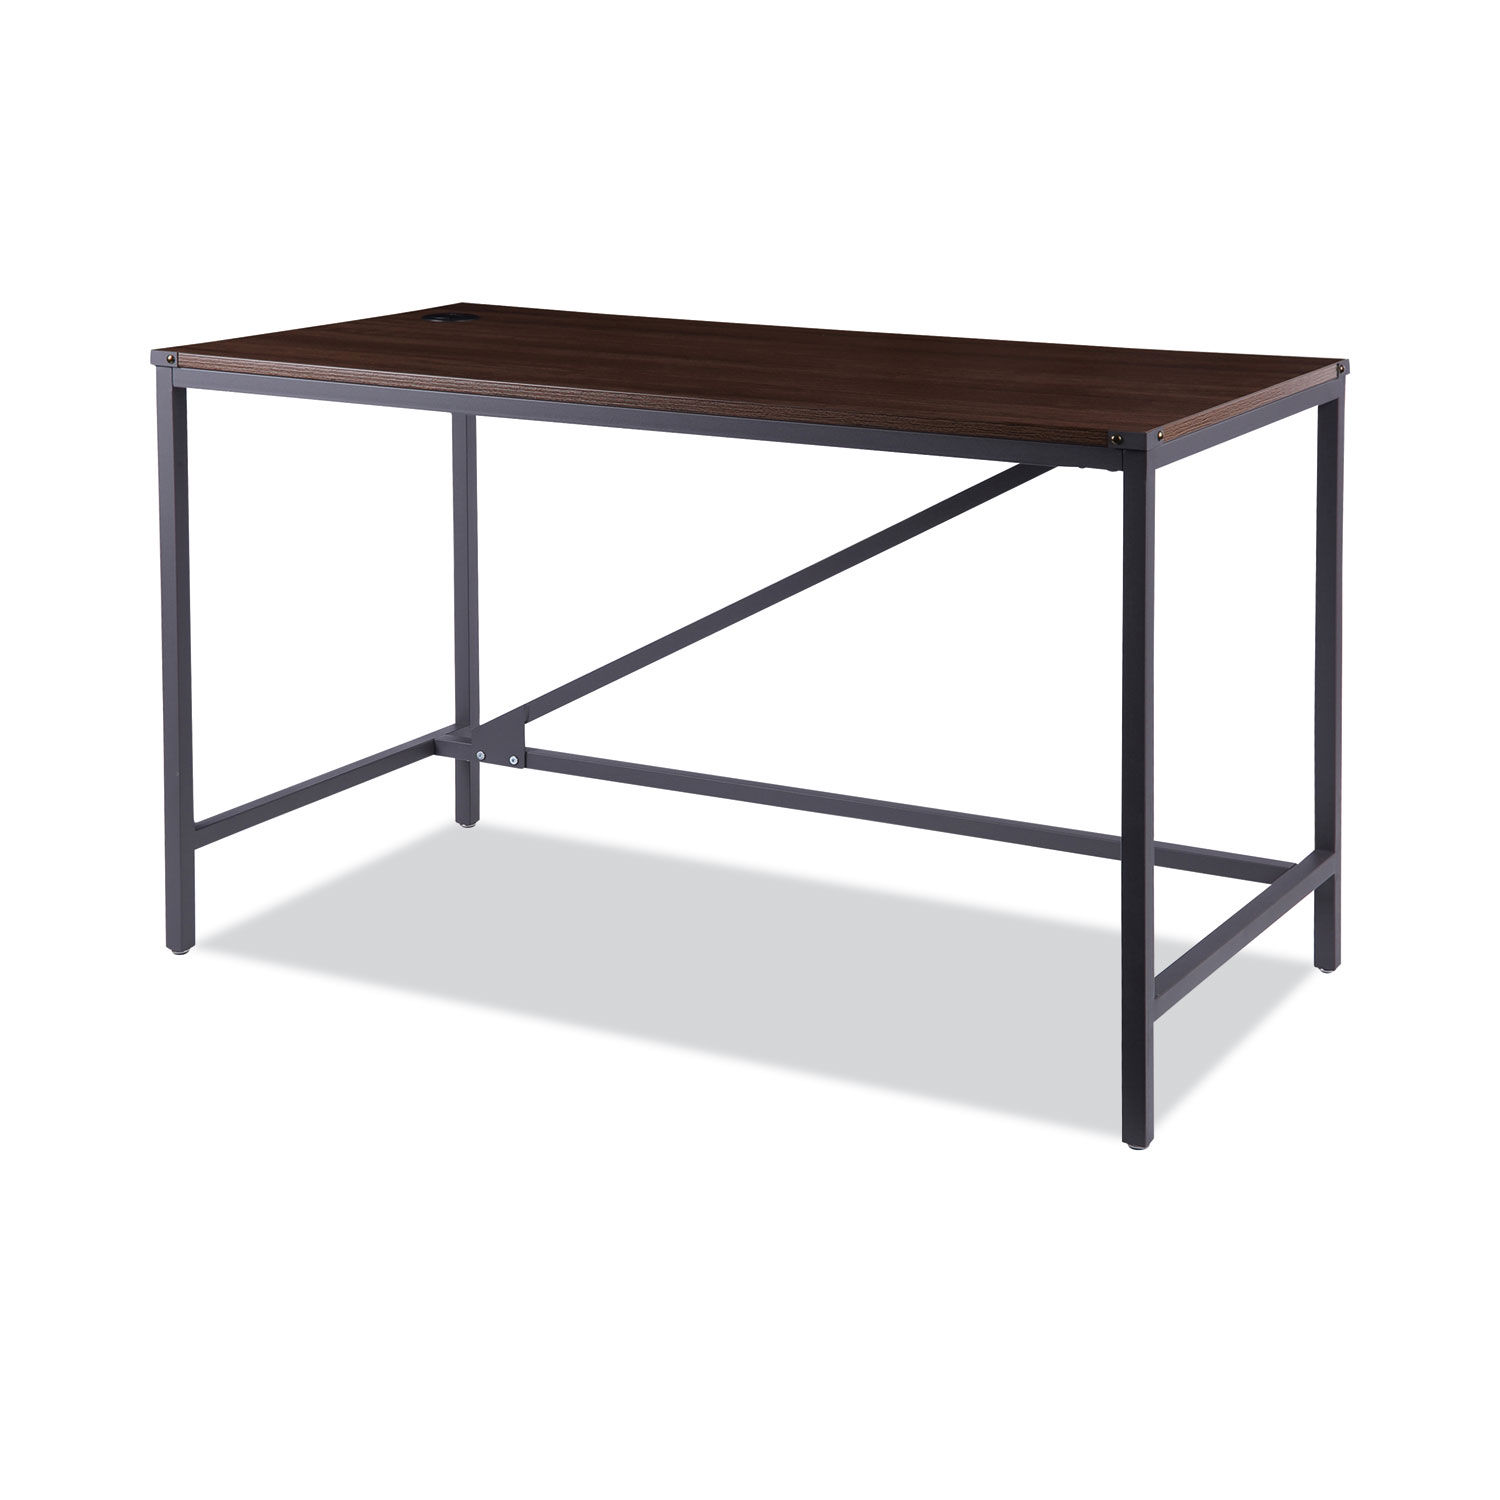 Industrial Series Table Desk 47.25" x 23.63" x 29.5", Modern Walnut